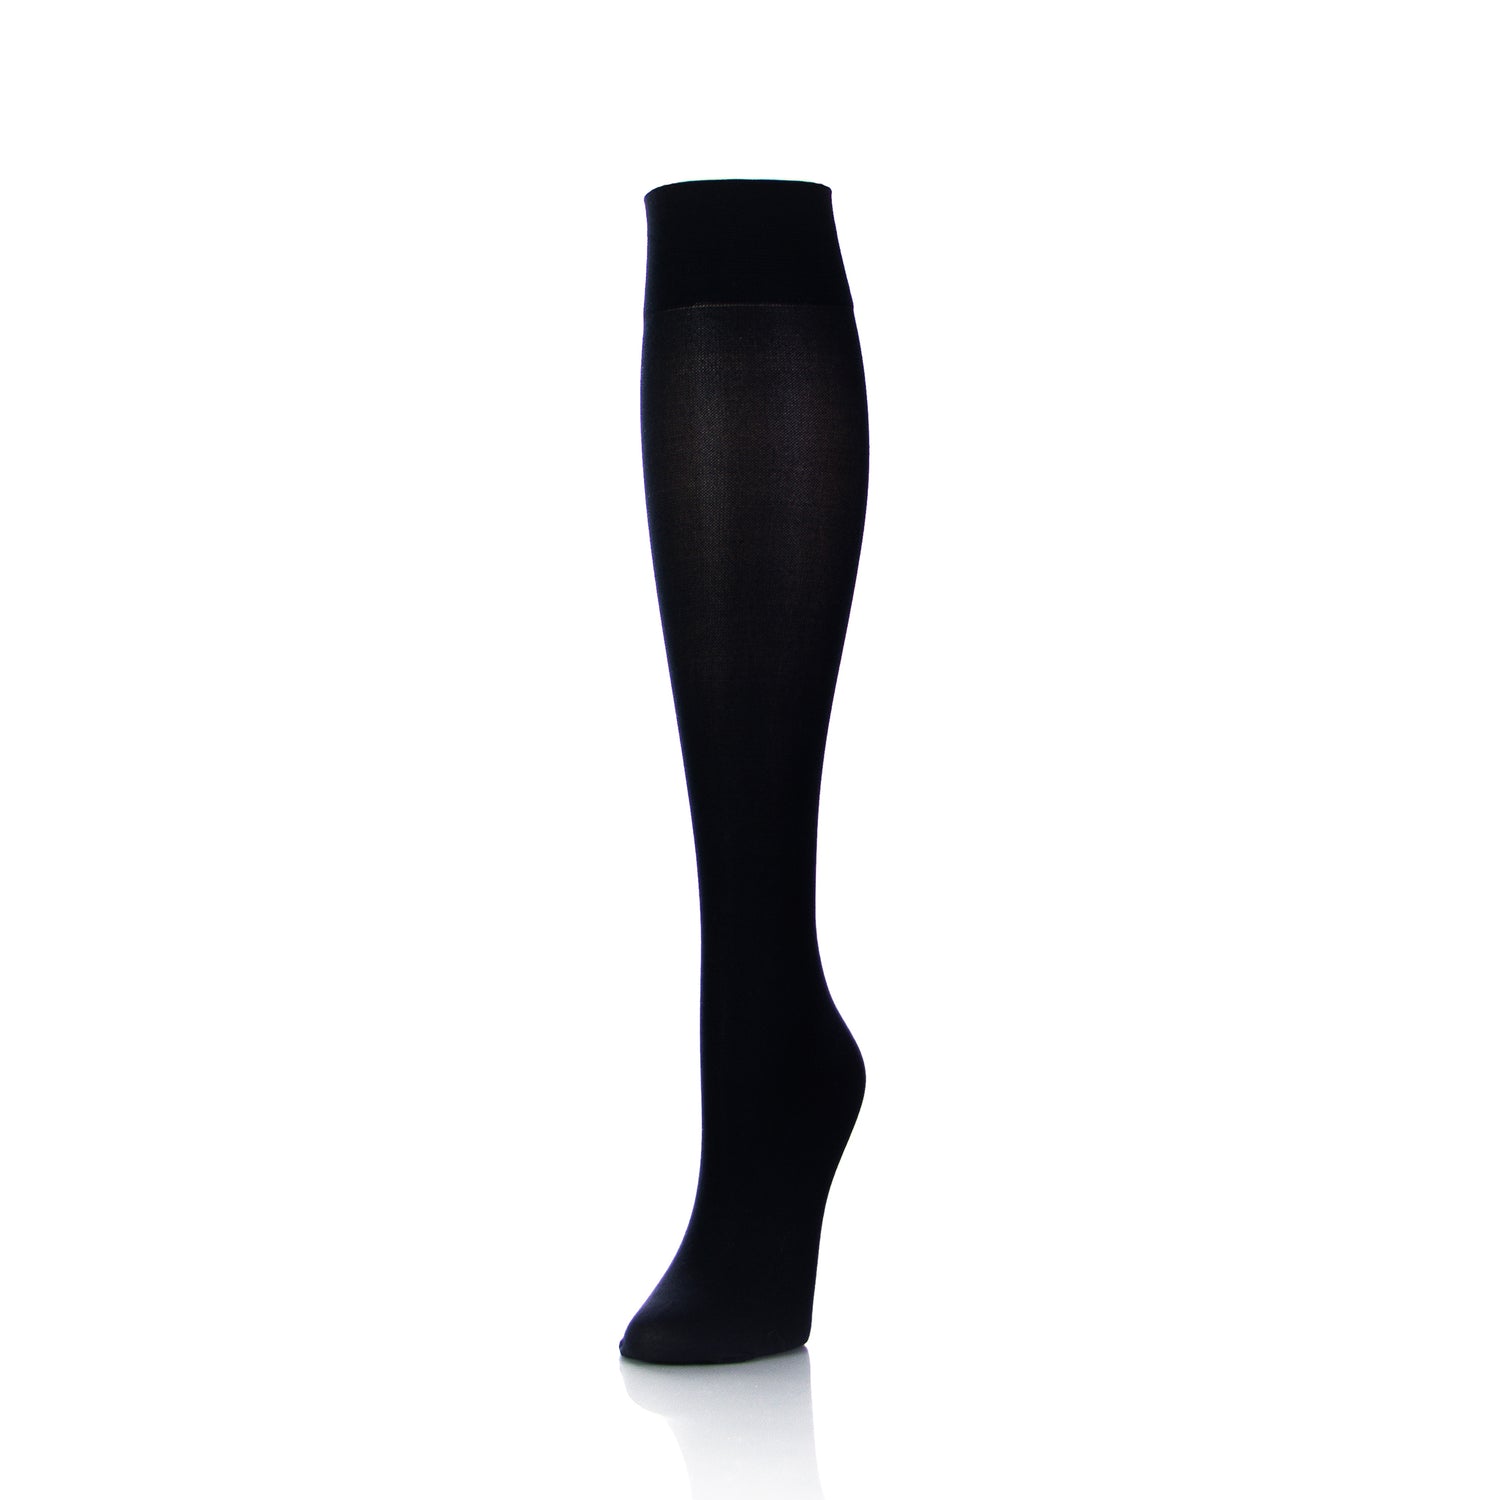 Compression Socks For Women - Softmedi  20 30 mmHg - Knee High – Doctor  Brace